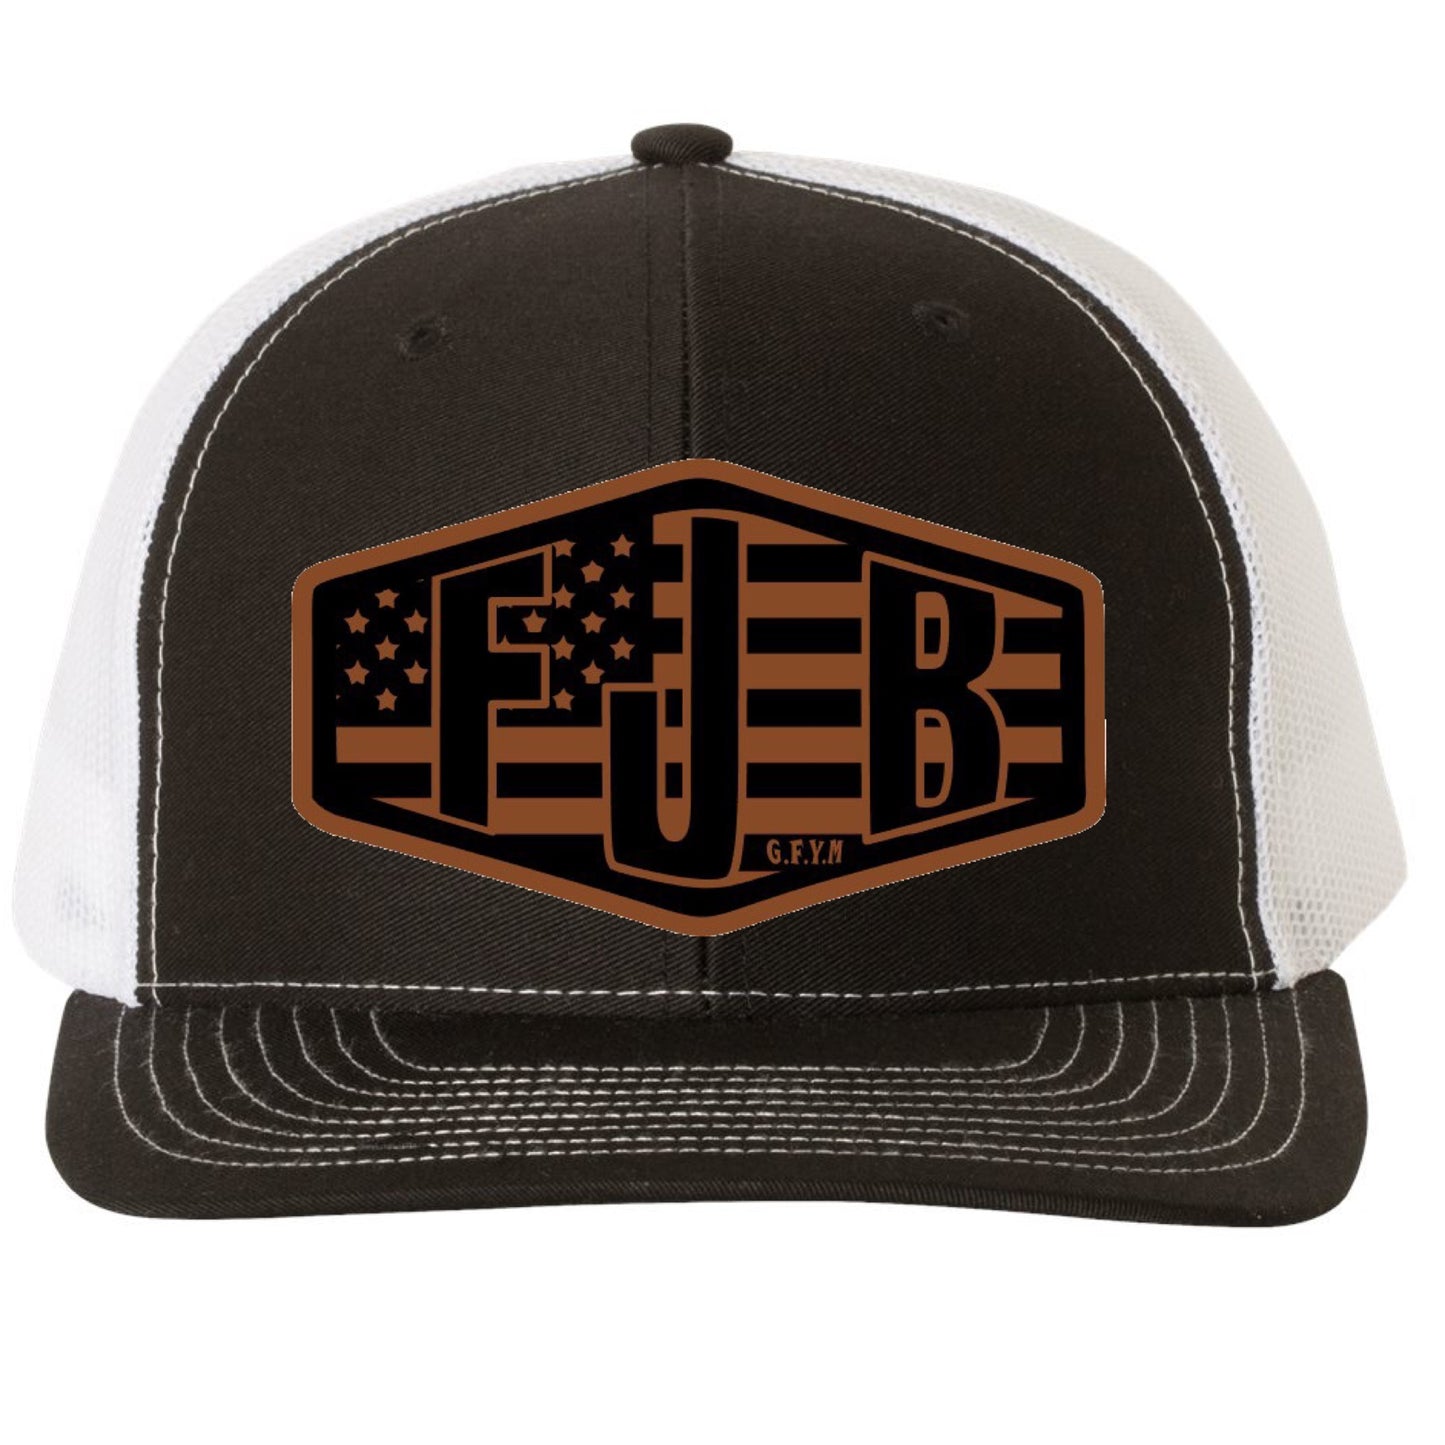 FJB Leather Patch Richardson 112 Trucker Hat